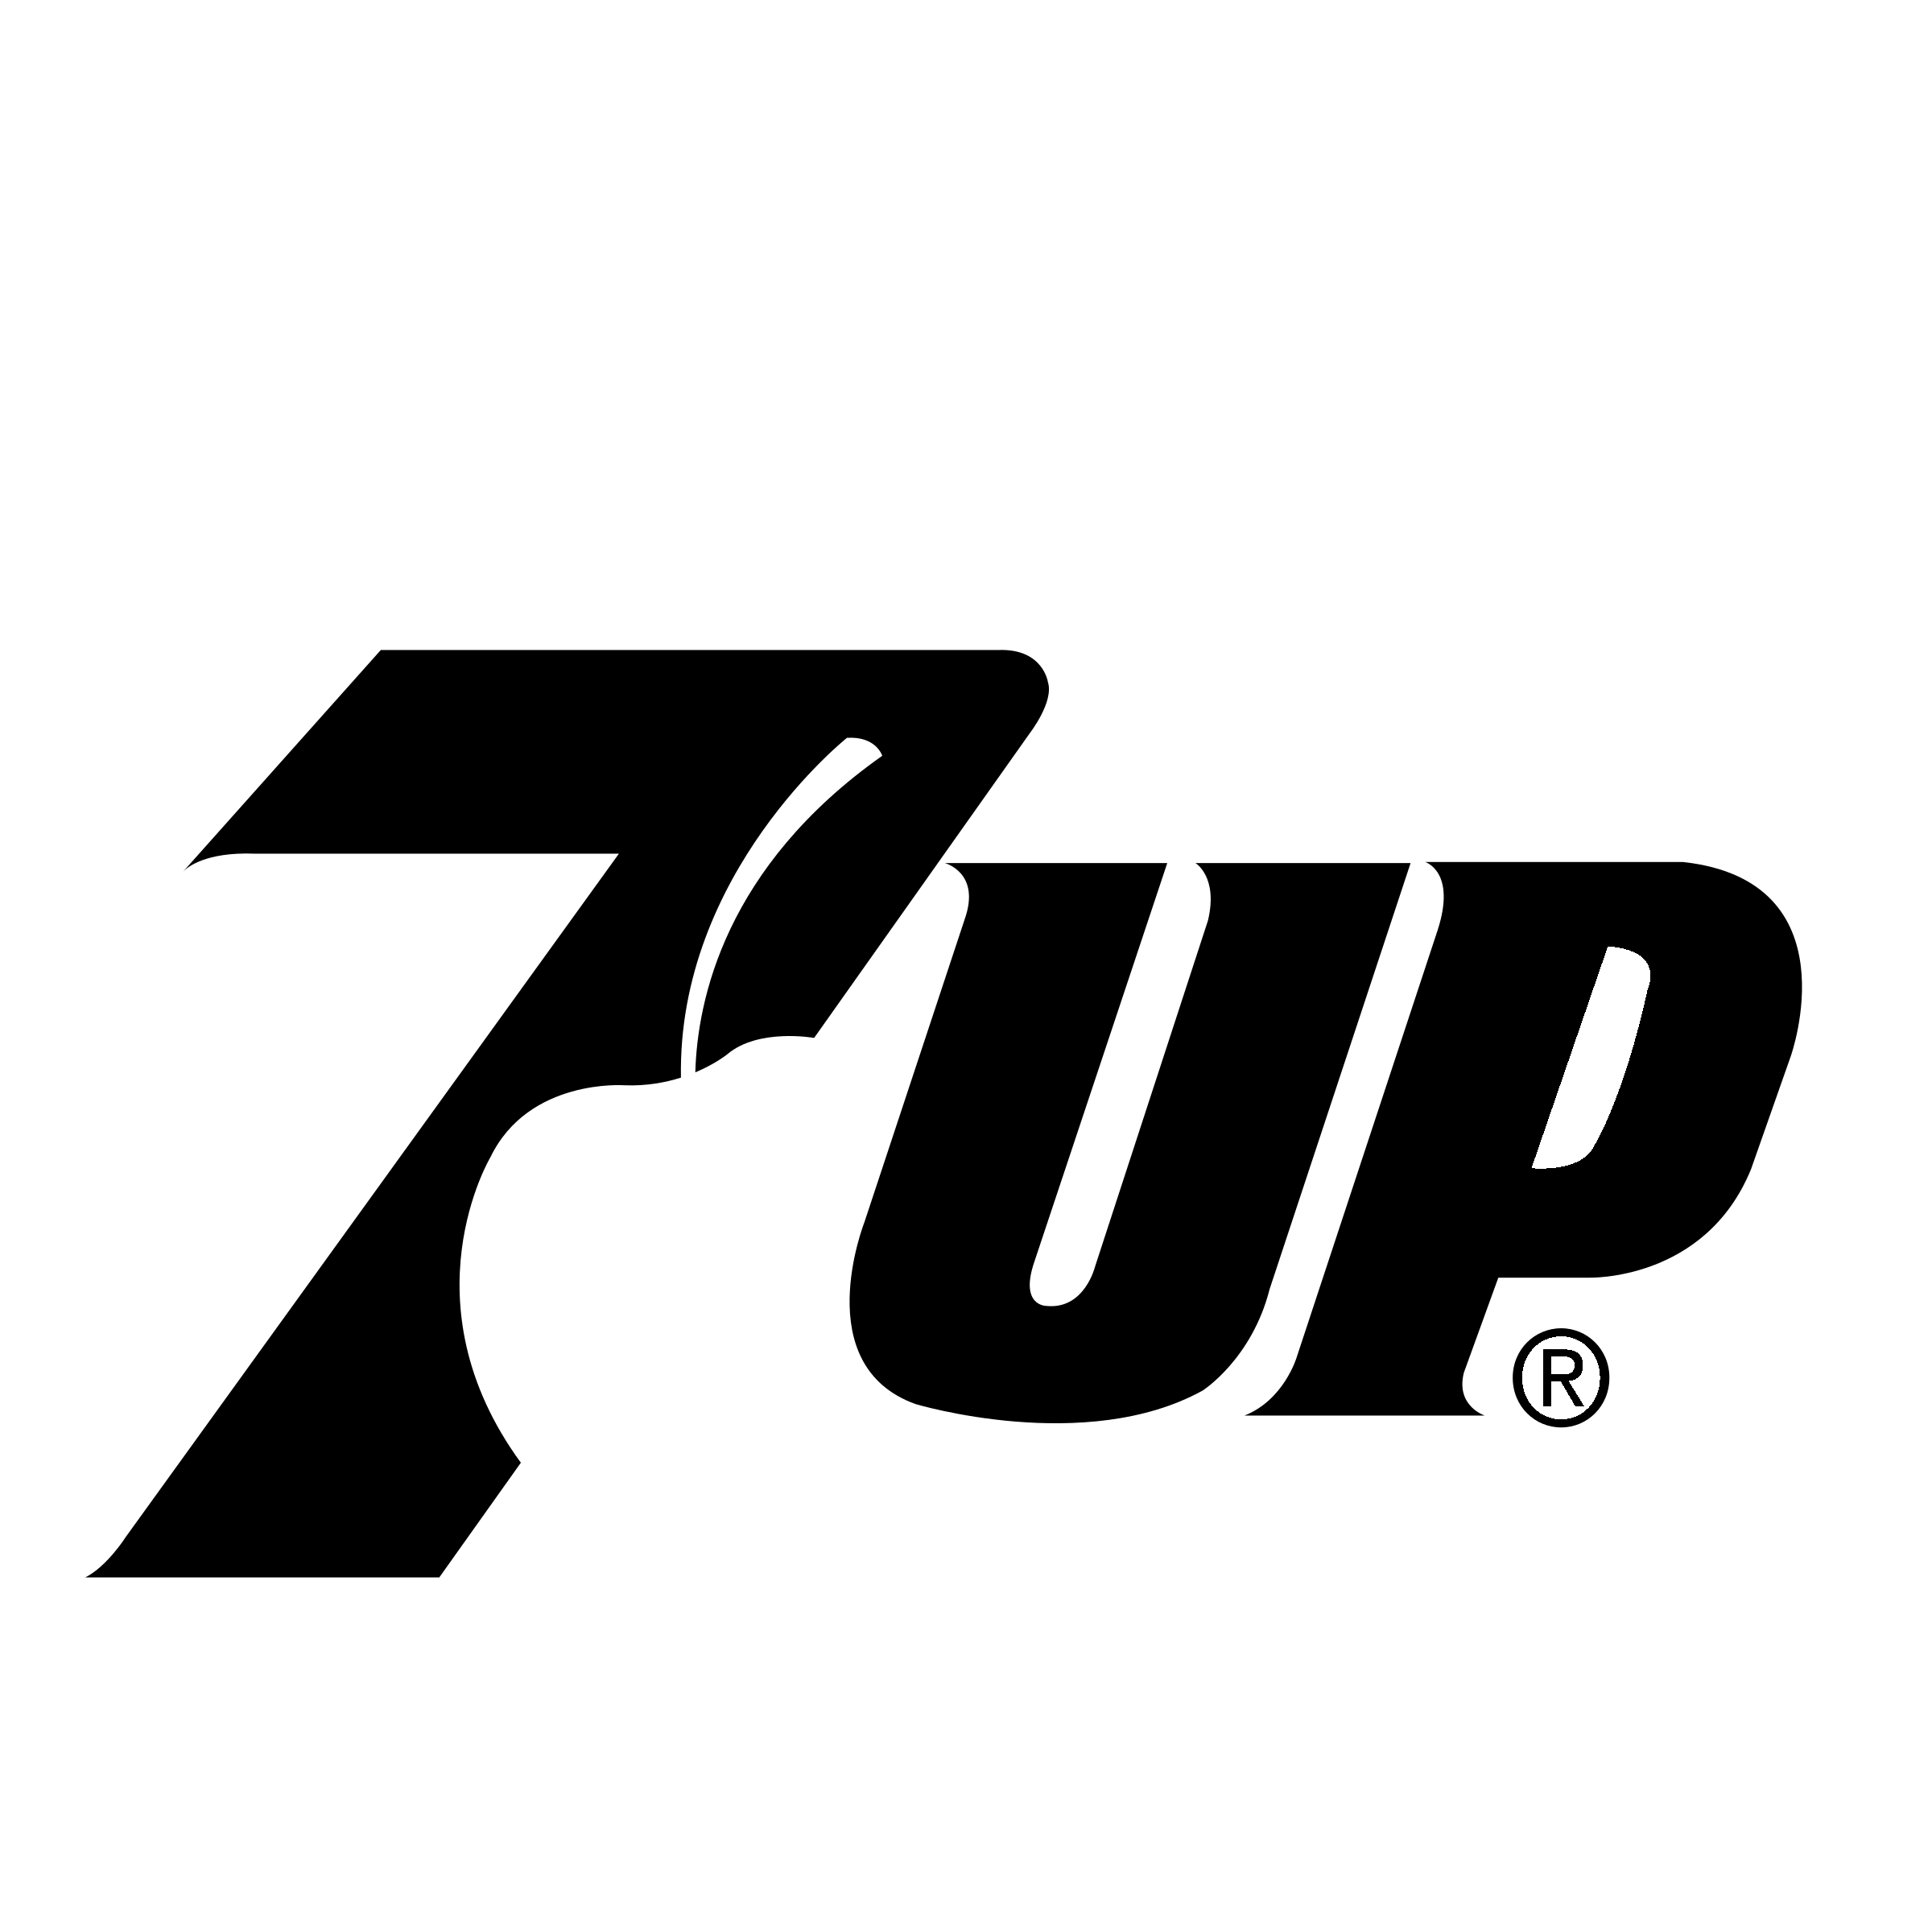 Diet 7Up Logo - 7Up Diet Cherry Logo PNG Transparent & SVG Vector - Freebie Supply